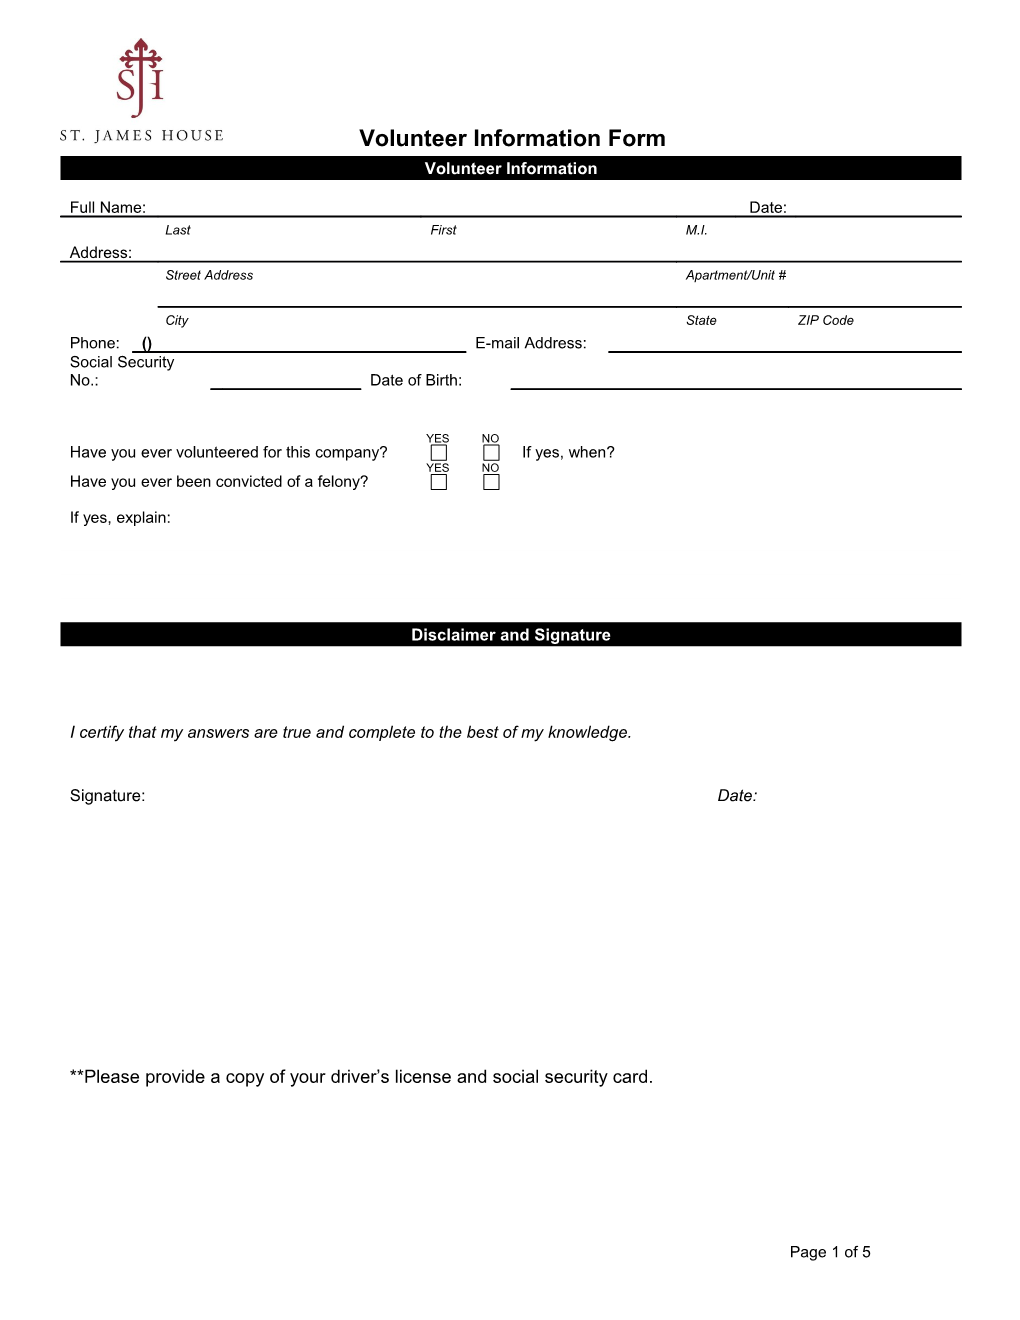 Volunteerinformation Form